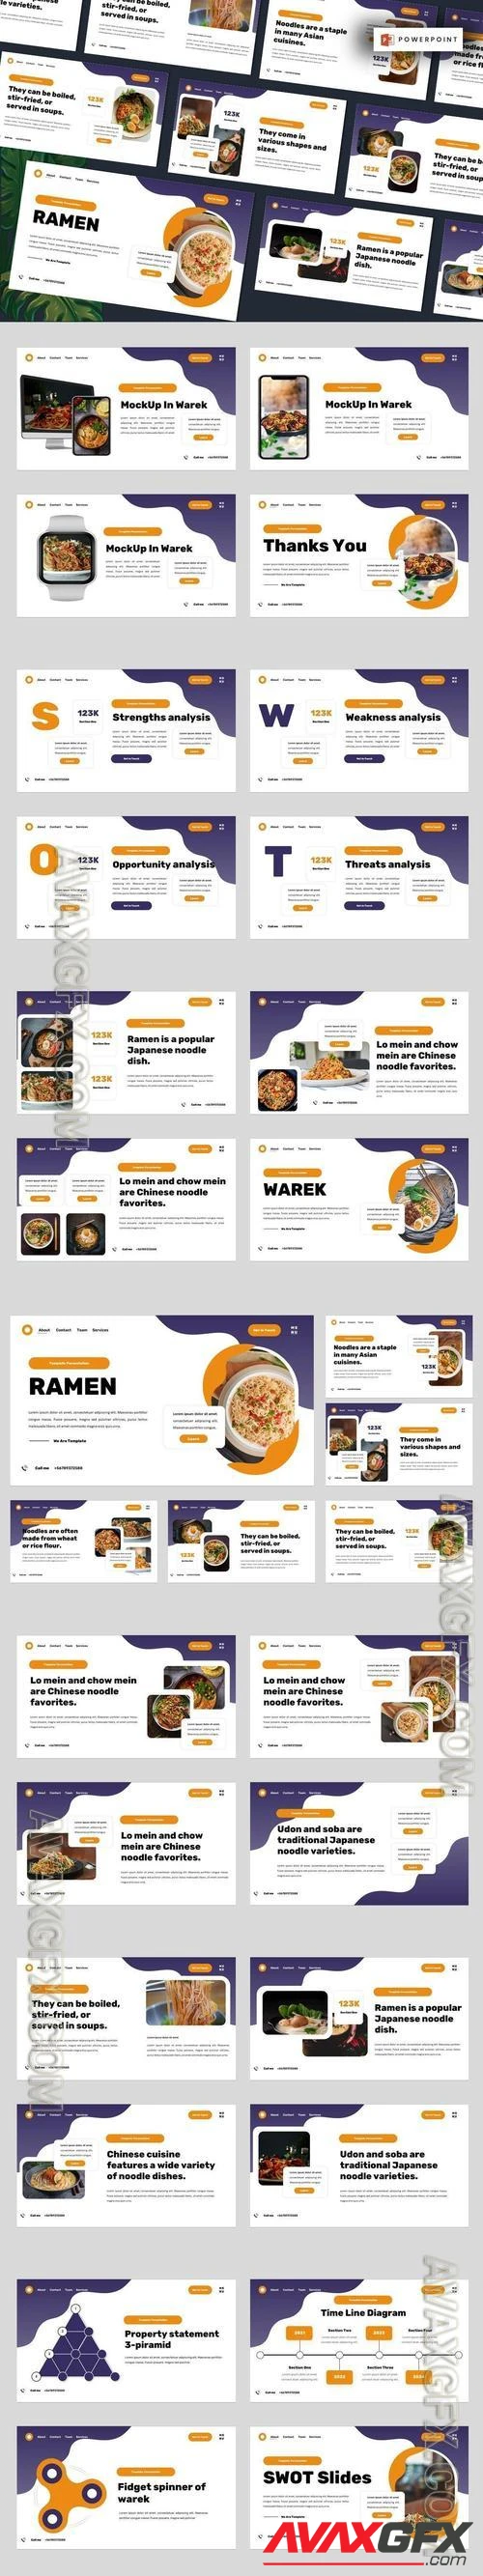 Ramen - Noodle & Japan Food Powerpoint Template